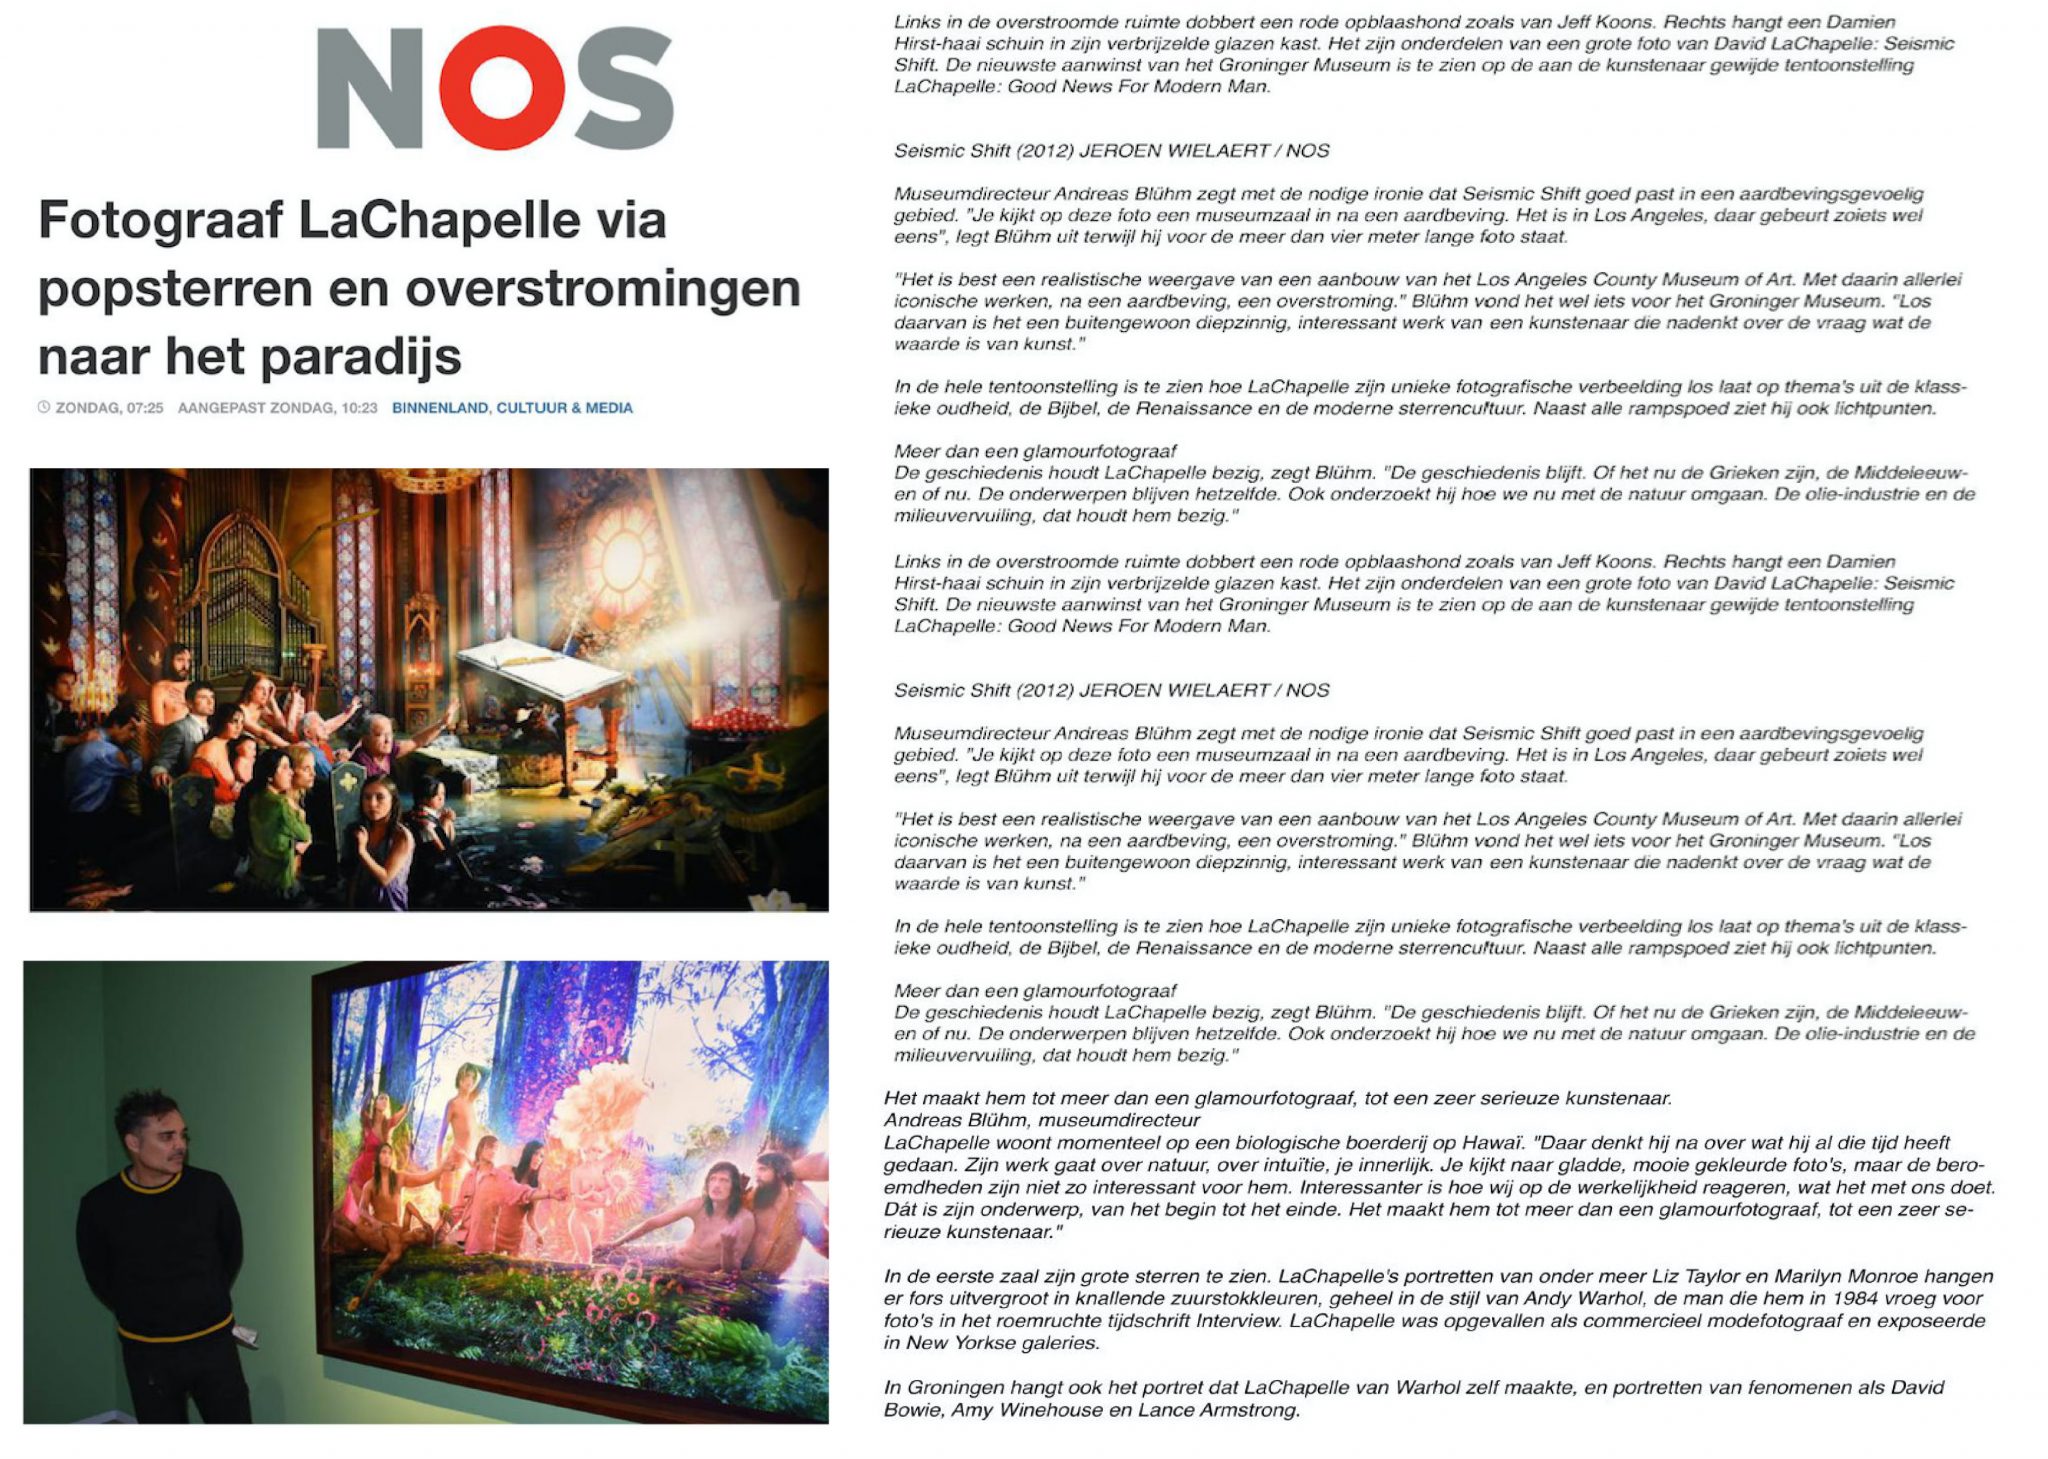 David LaChapelle | Groninger Museum, Groningen, The Netherlands, April 21 - October 28, 2018 | Selected press: NOS | 76